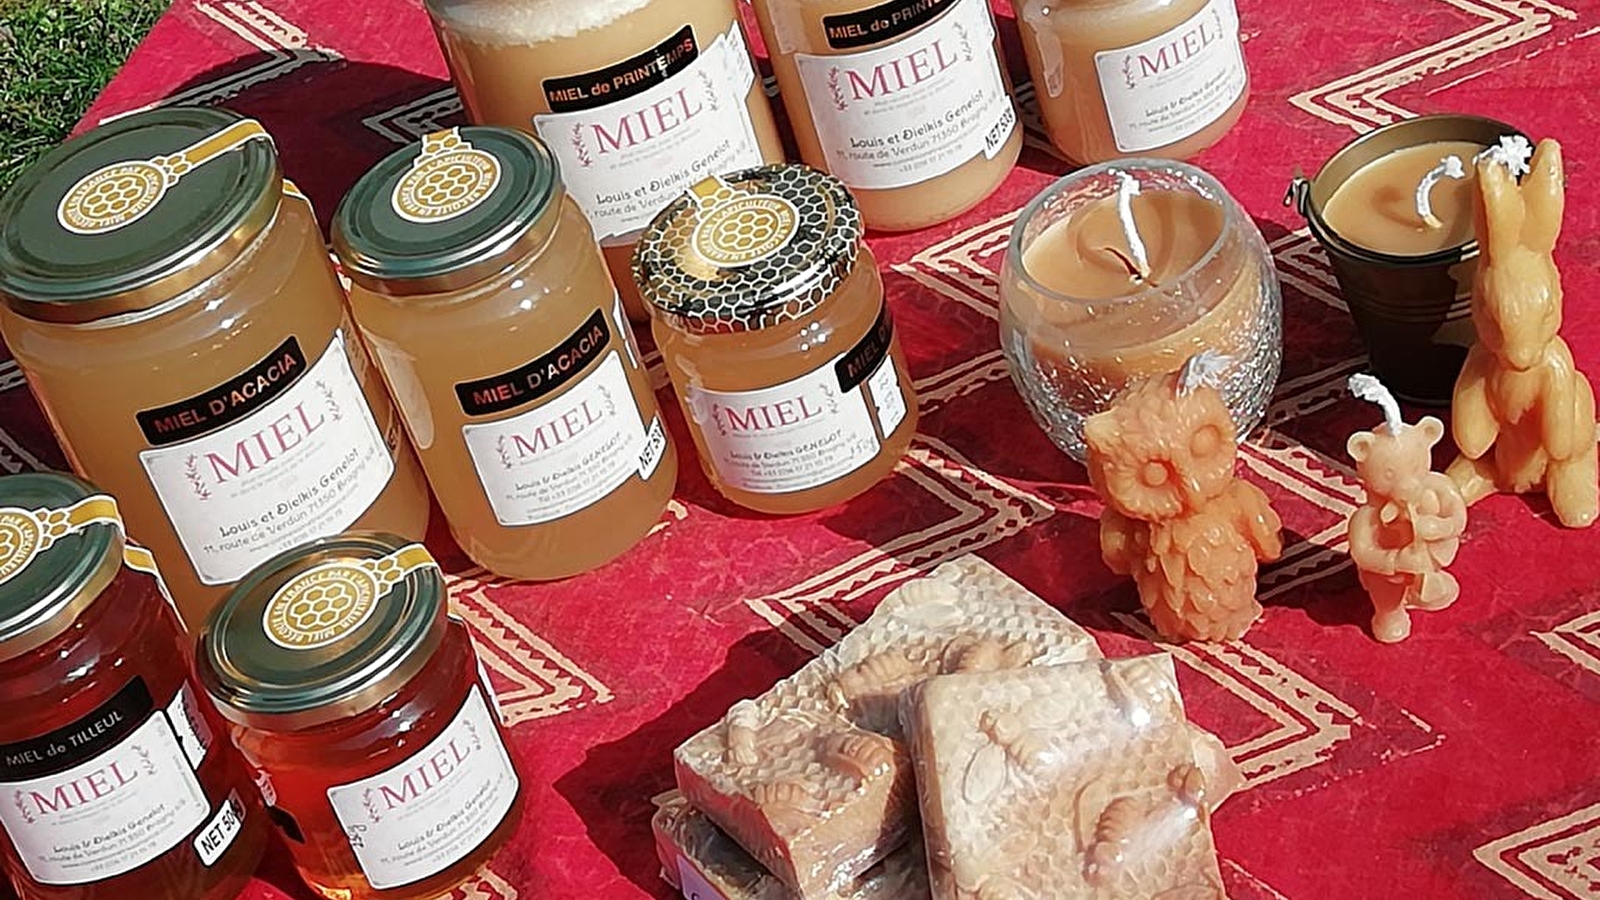 Miel acacia produit en Bourgogne-Franche-Comte